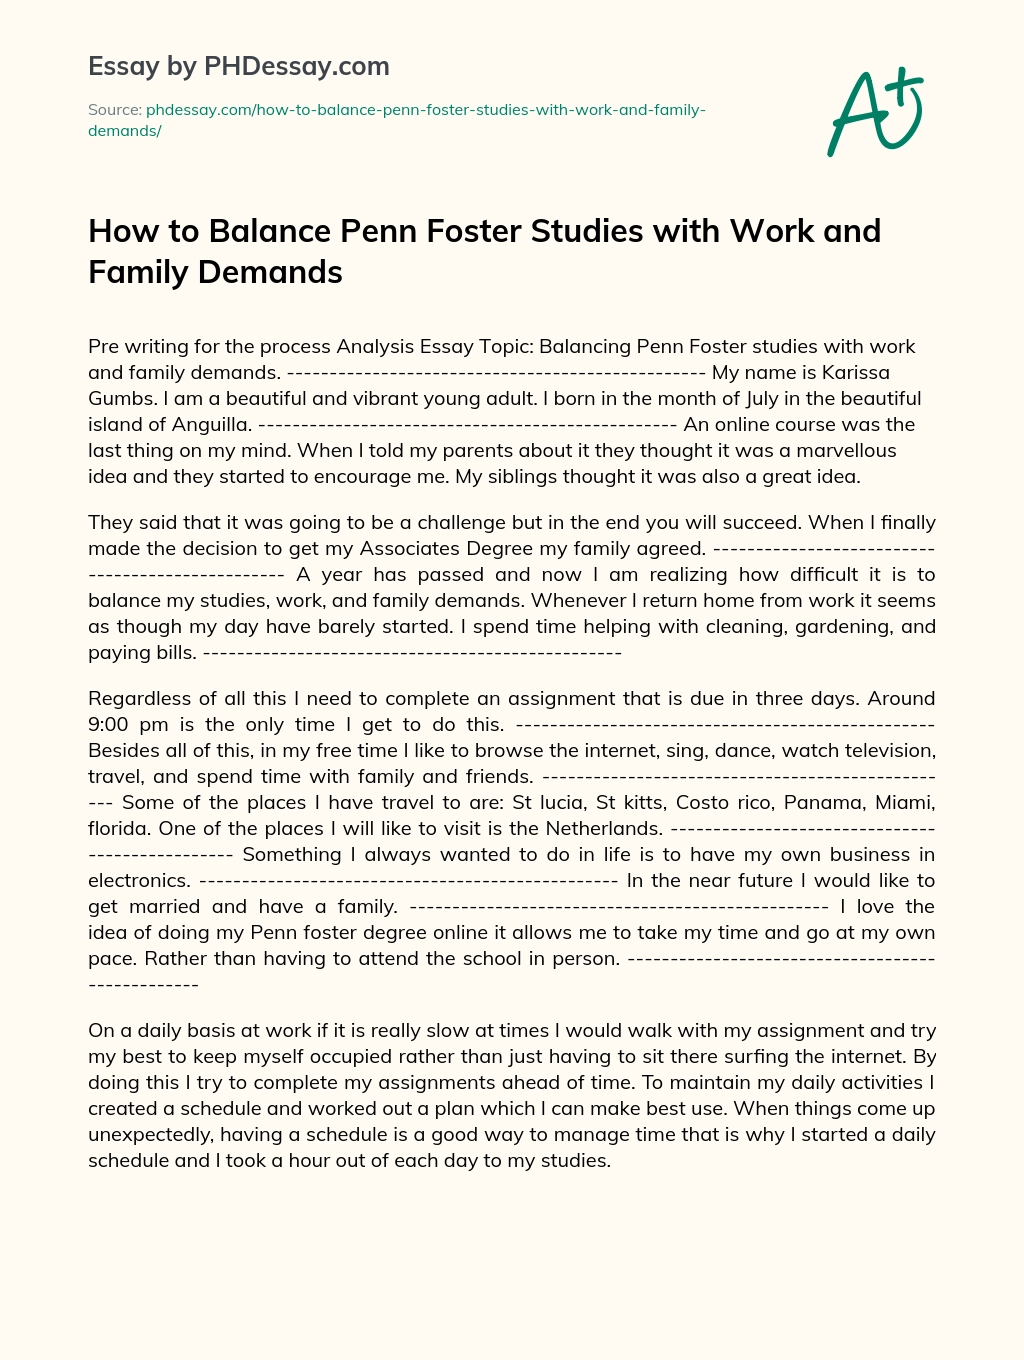 writing essay penn foster